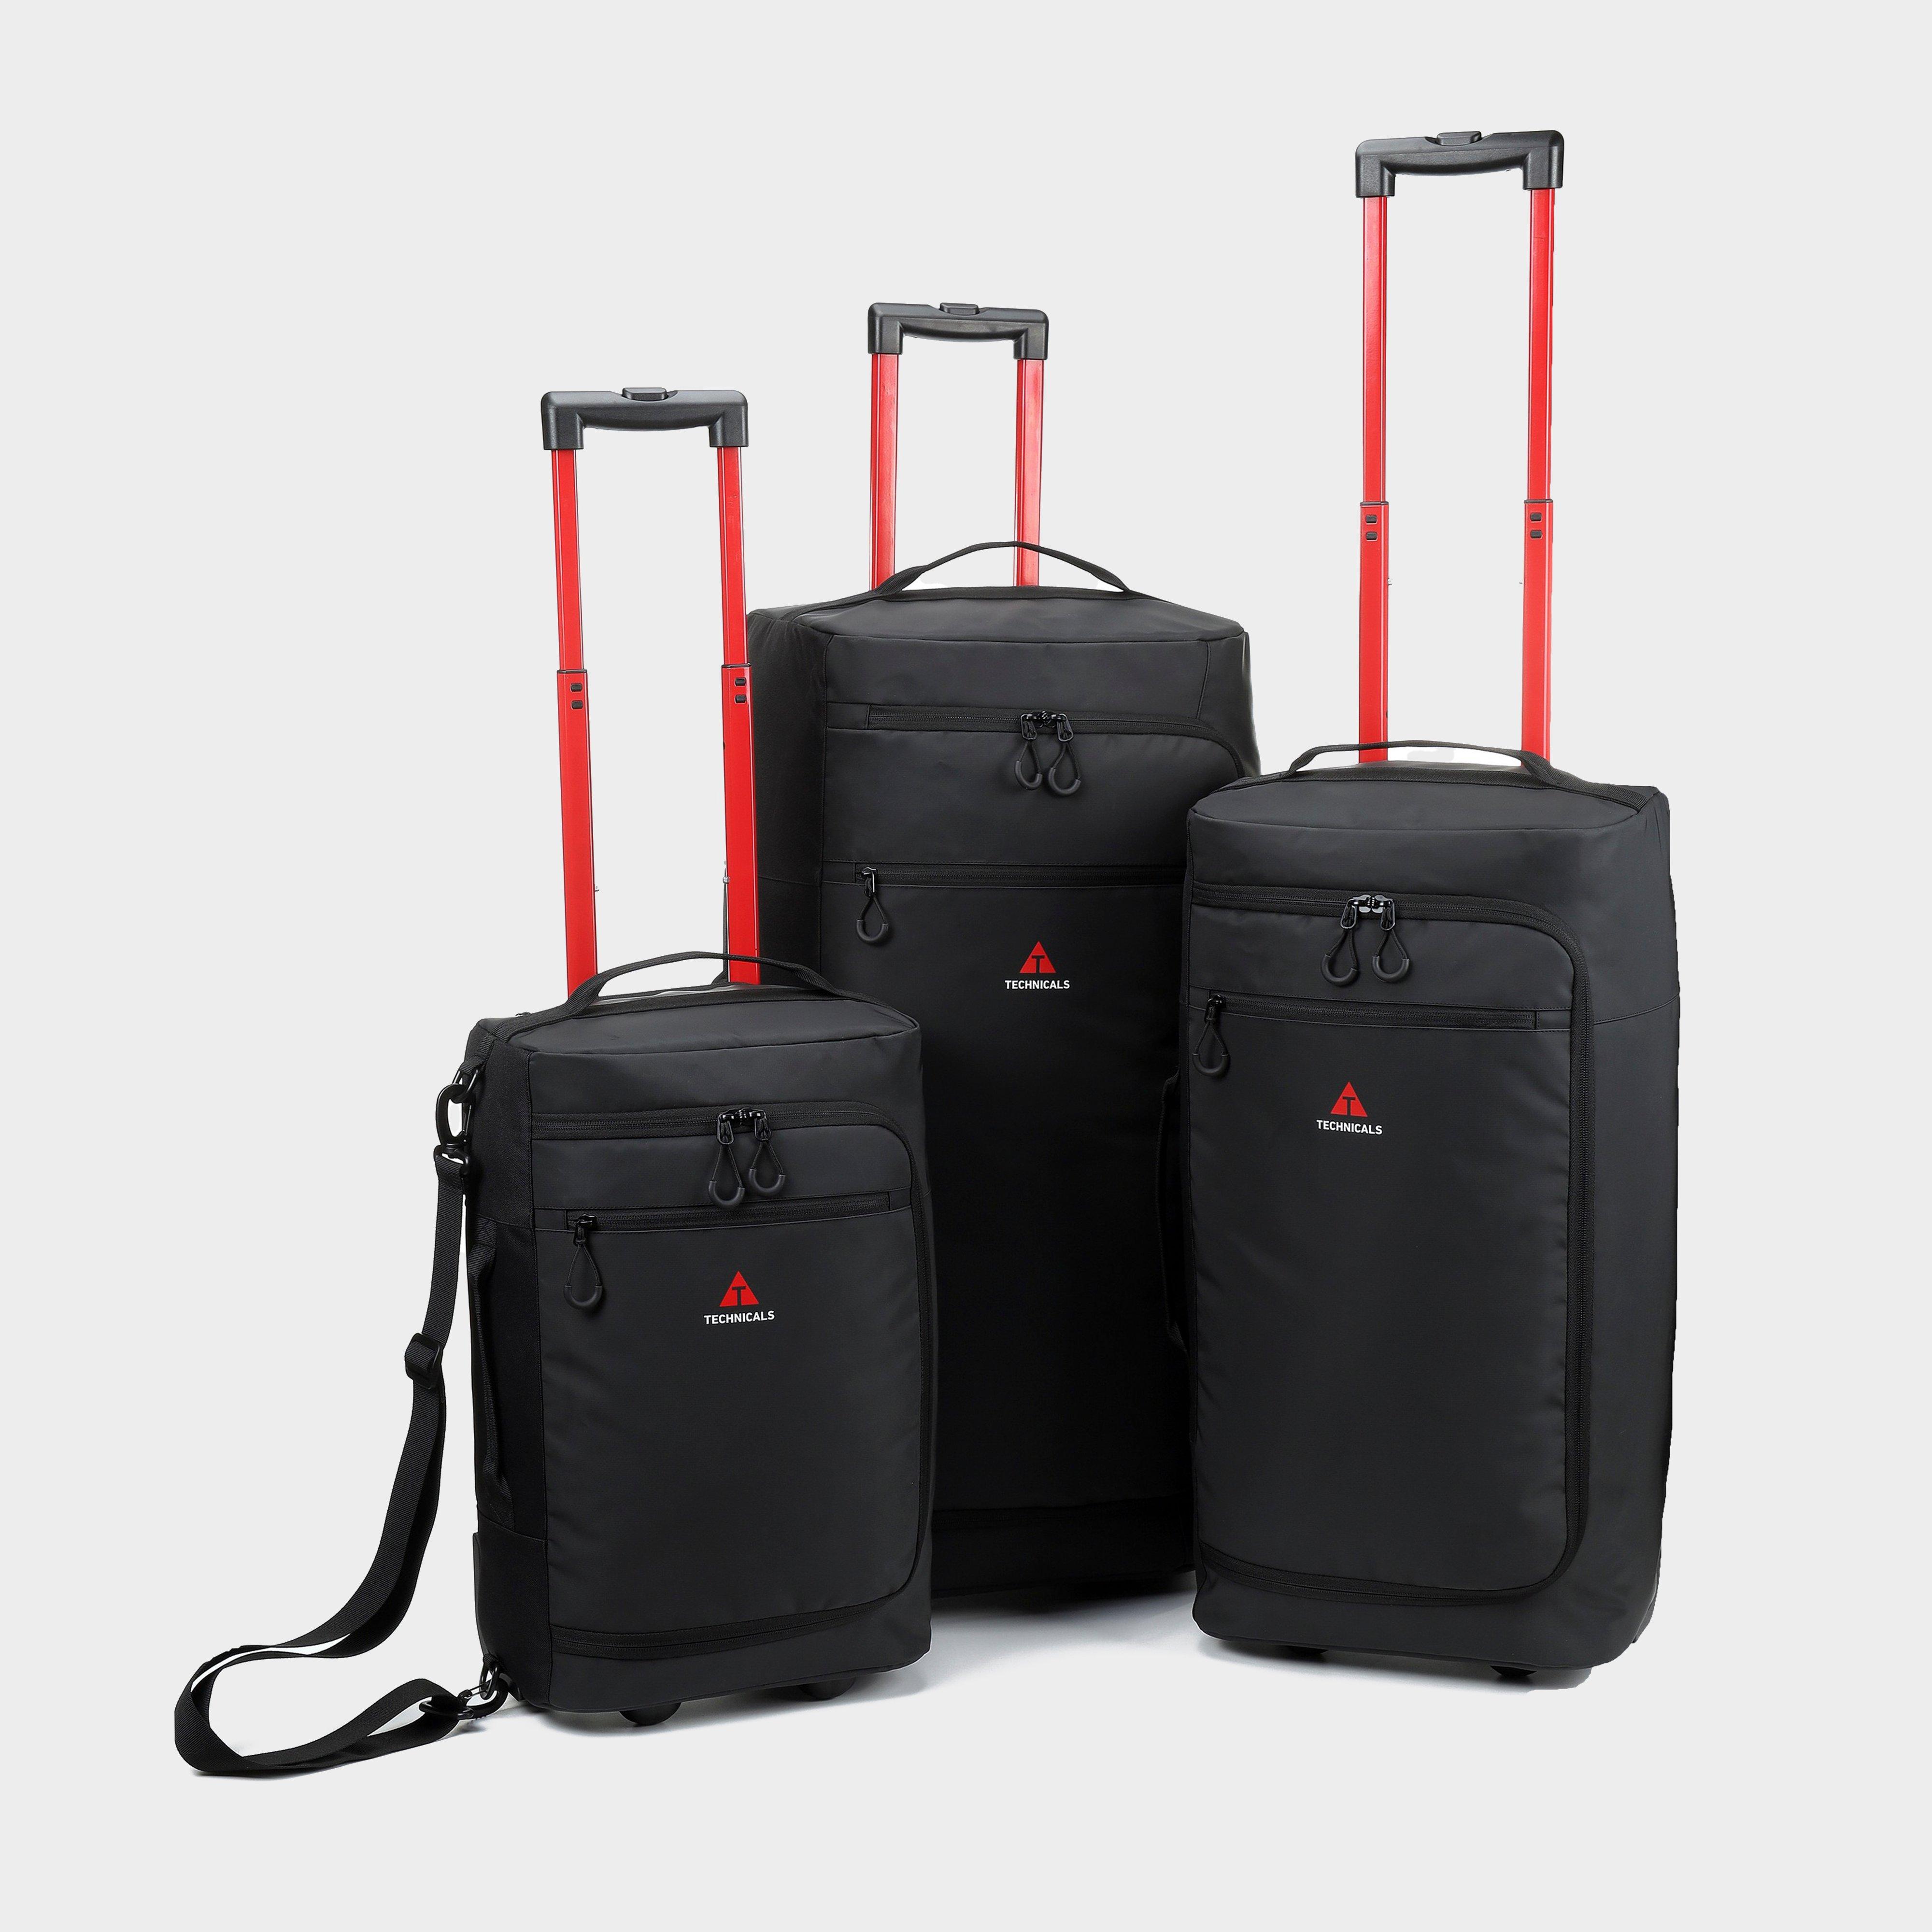 Technicals Exodus Lite Luggage Set - Grey/red  Grey/red